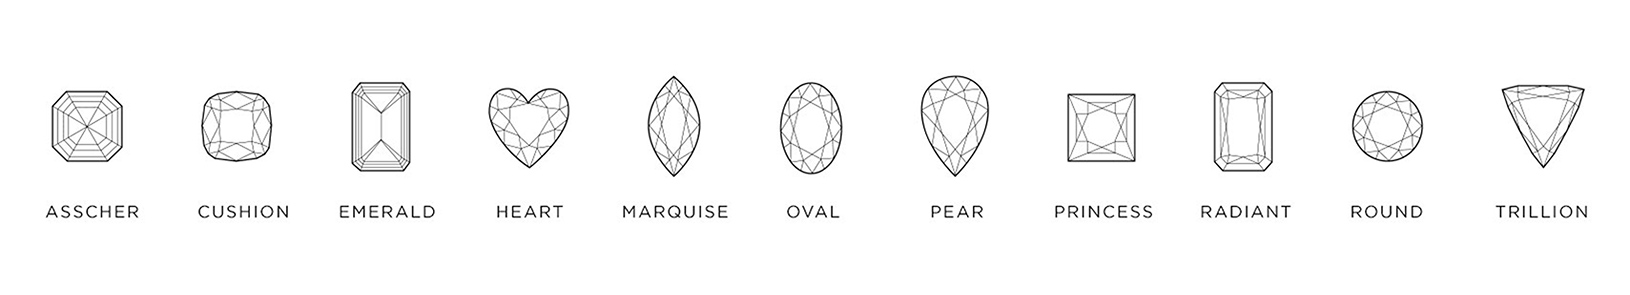 Popular diamond shapes